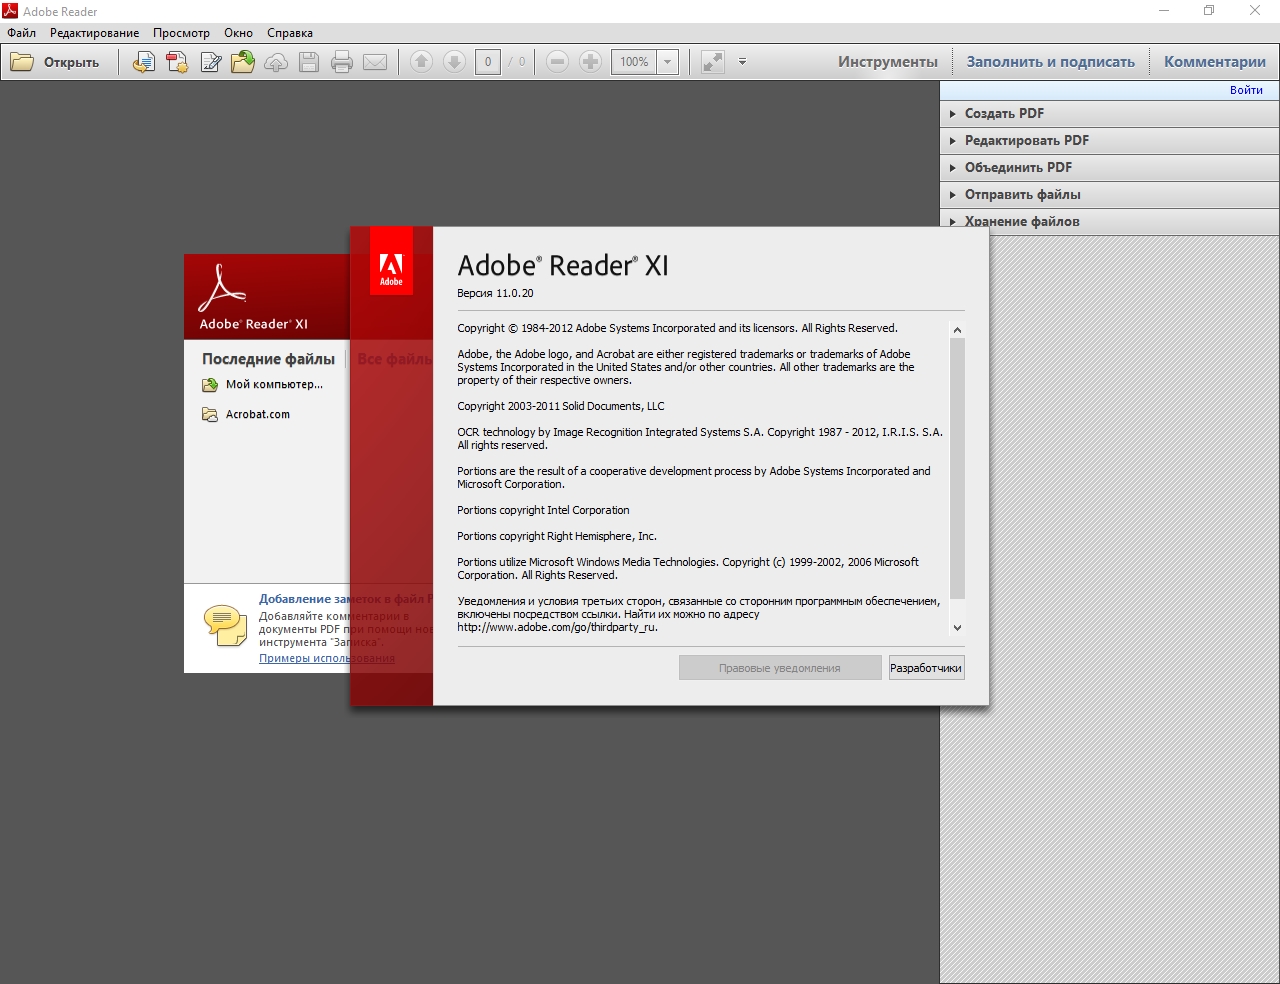 adobe acrobat reader for windows 8.1 download